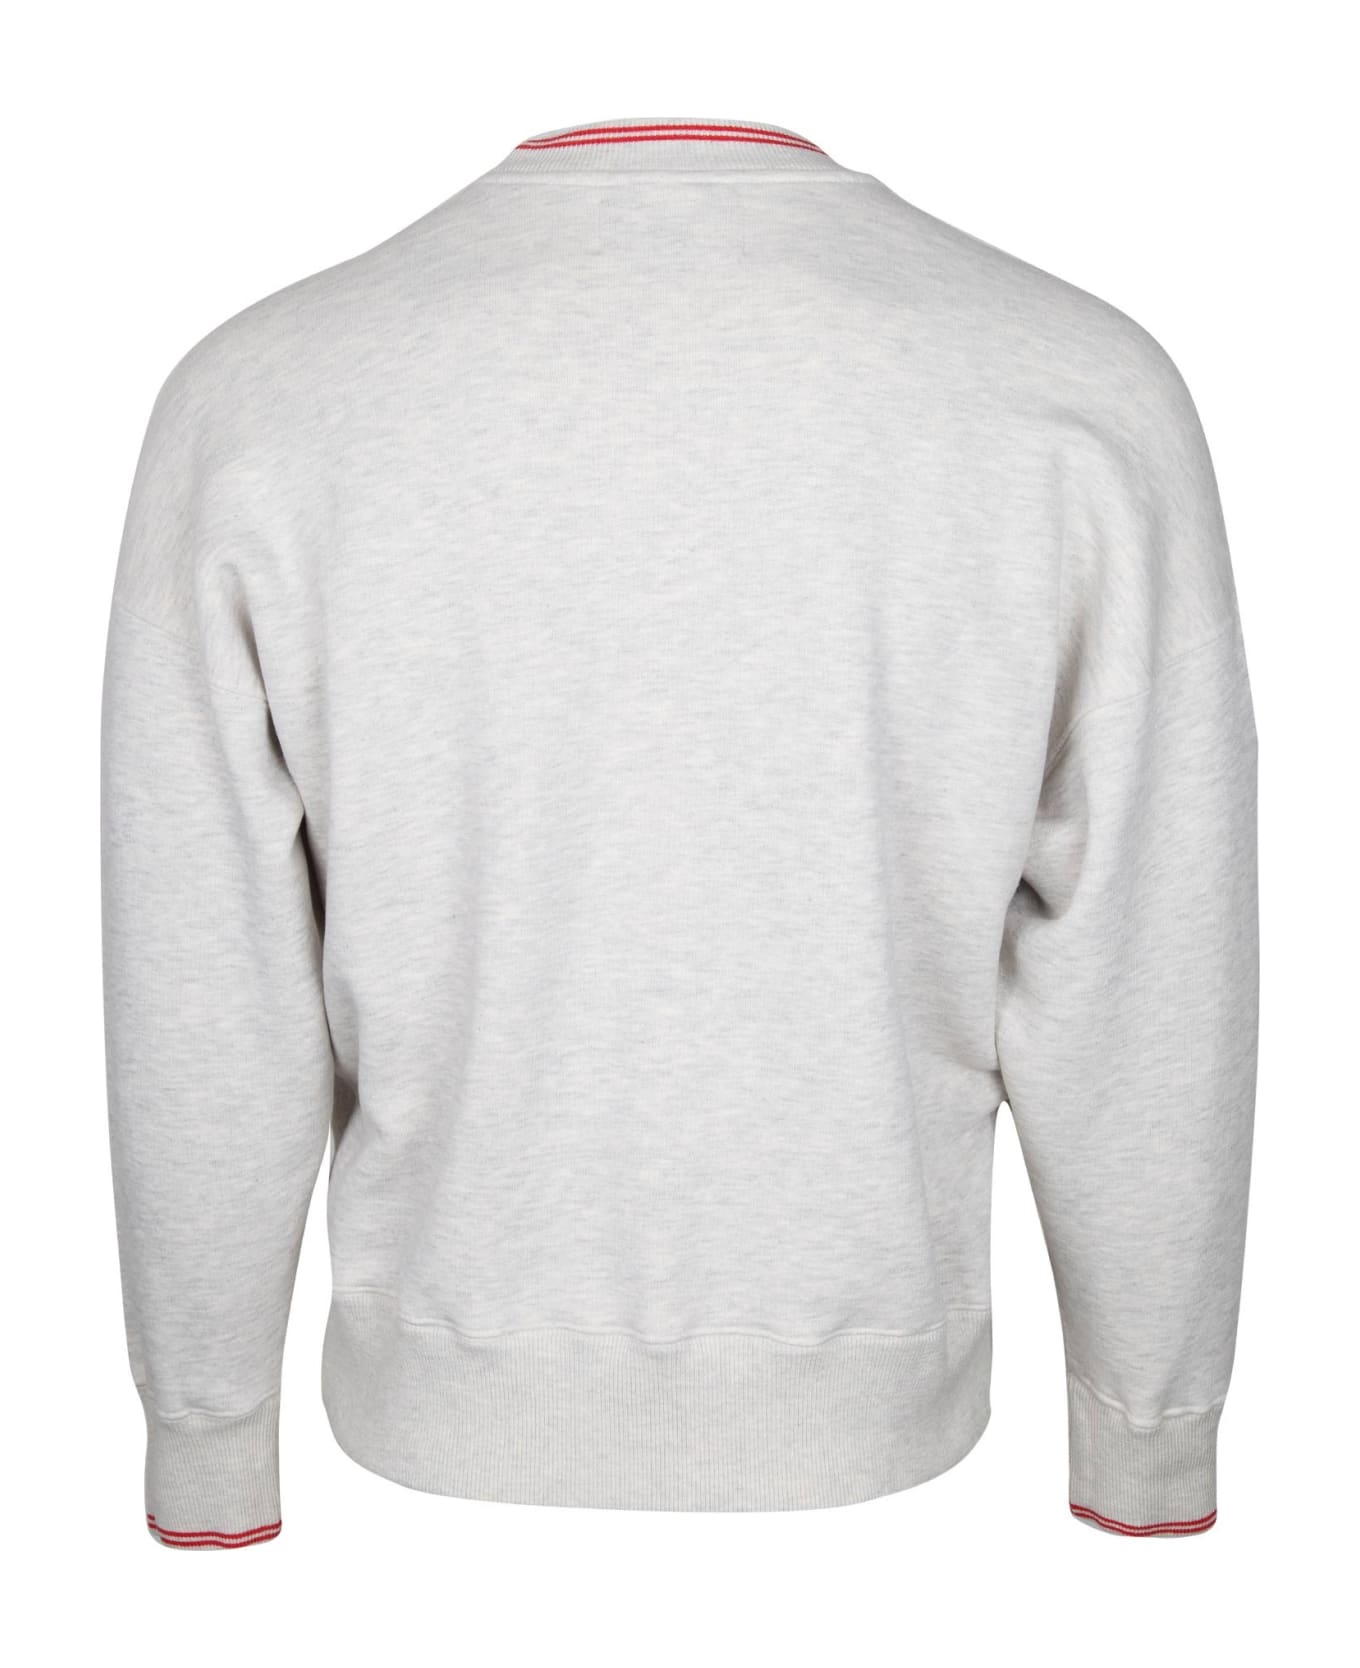 Autry Cotton Sweatshirt With Logo - MELANGE